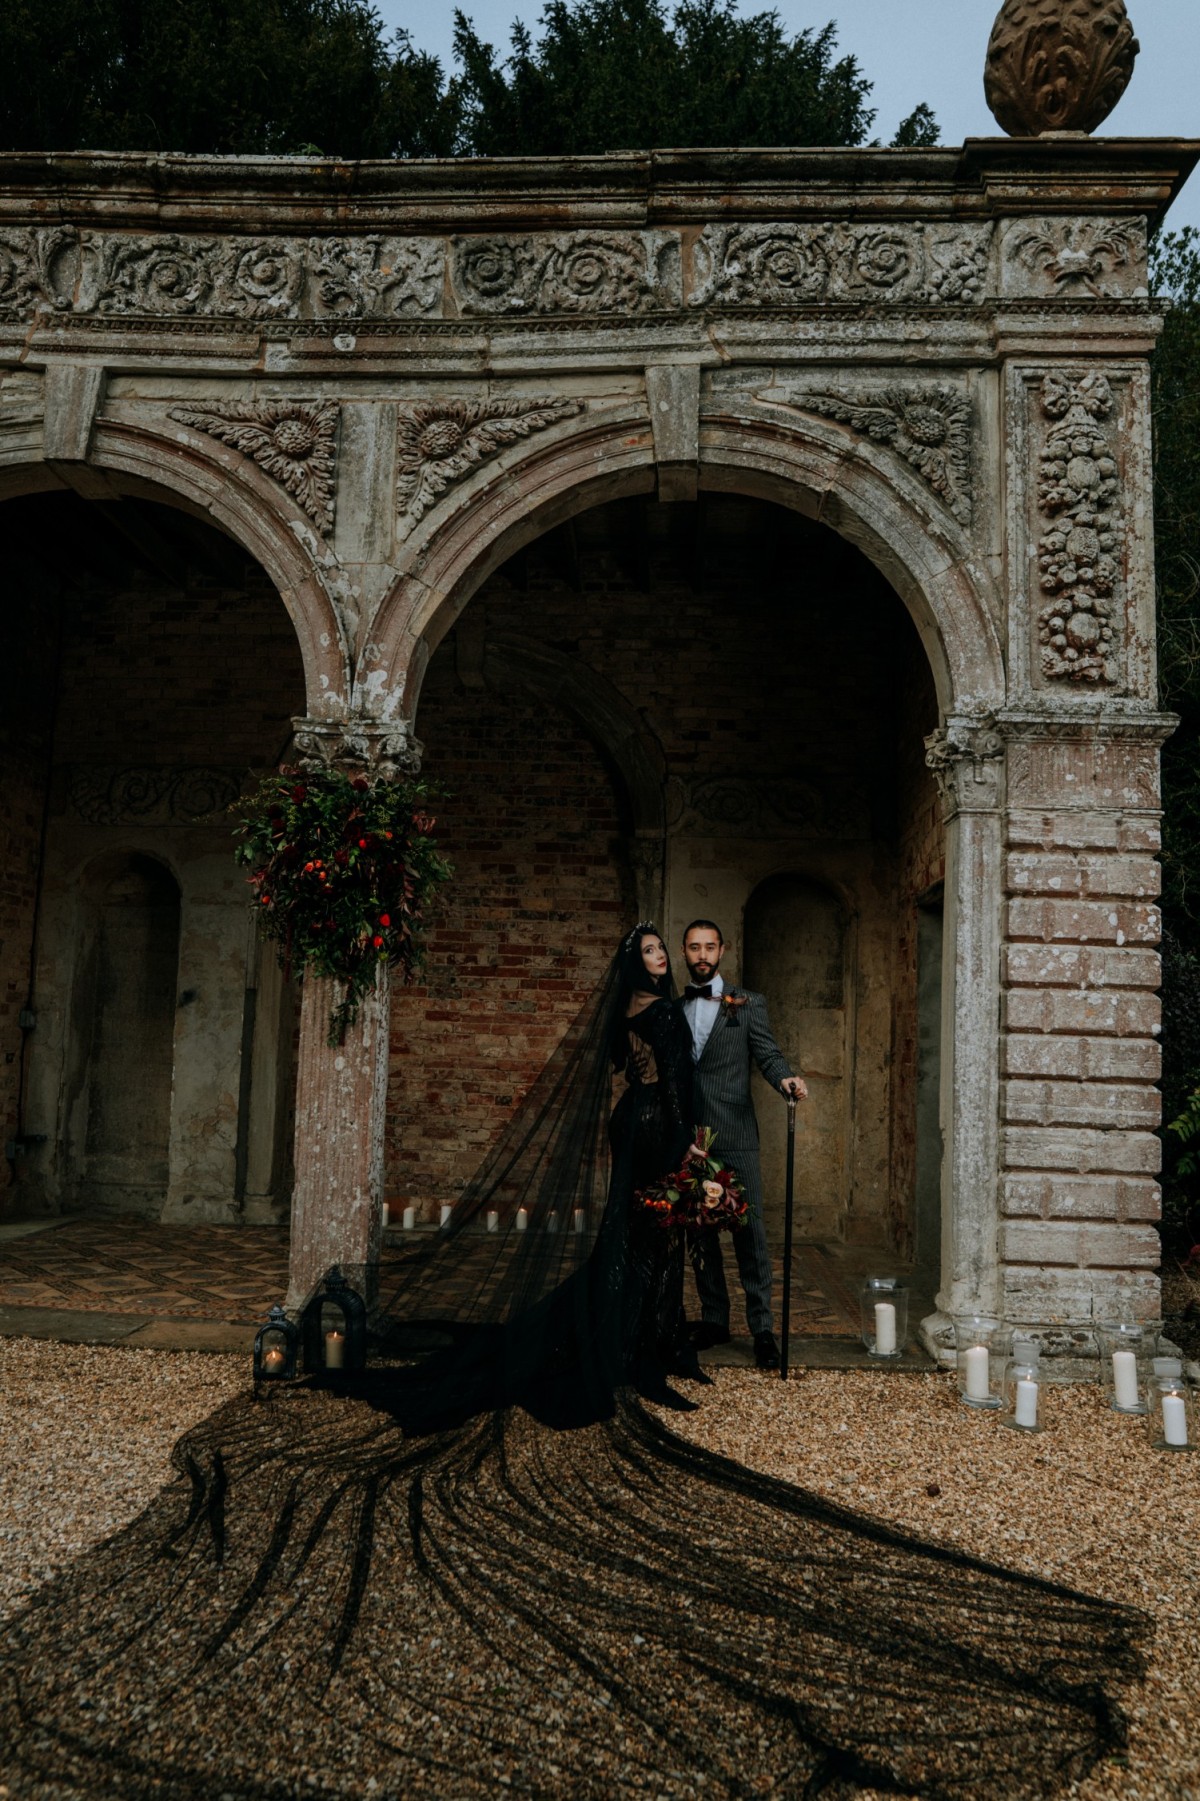 halloween wedding - addams family wedding - gomez and morticia halloween wedding - gothic wedding theme - long black veil